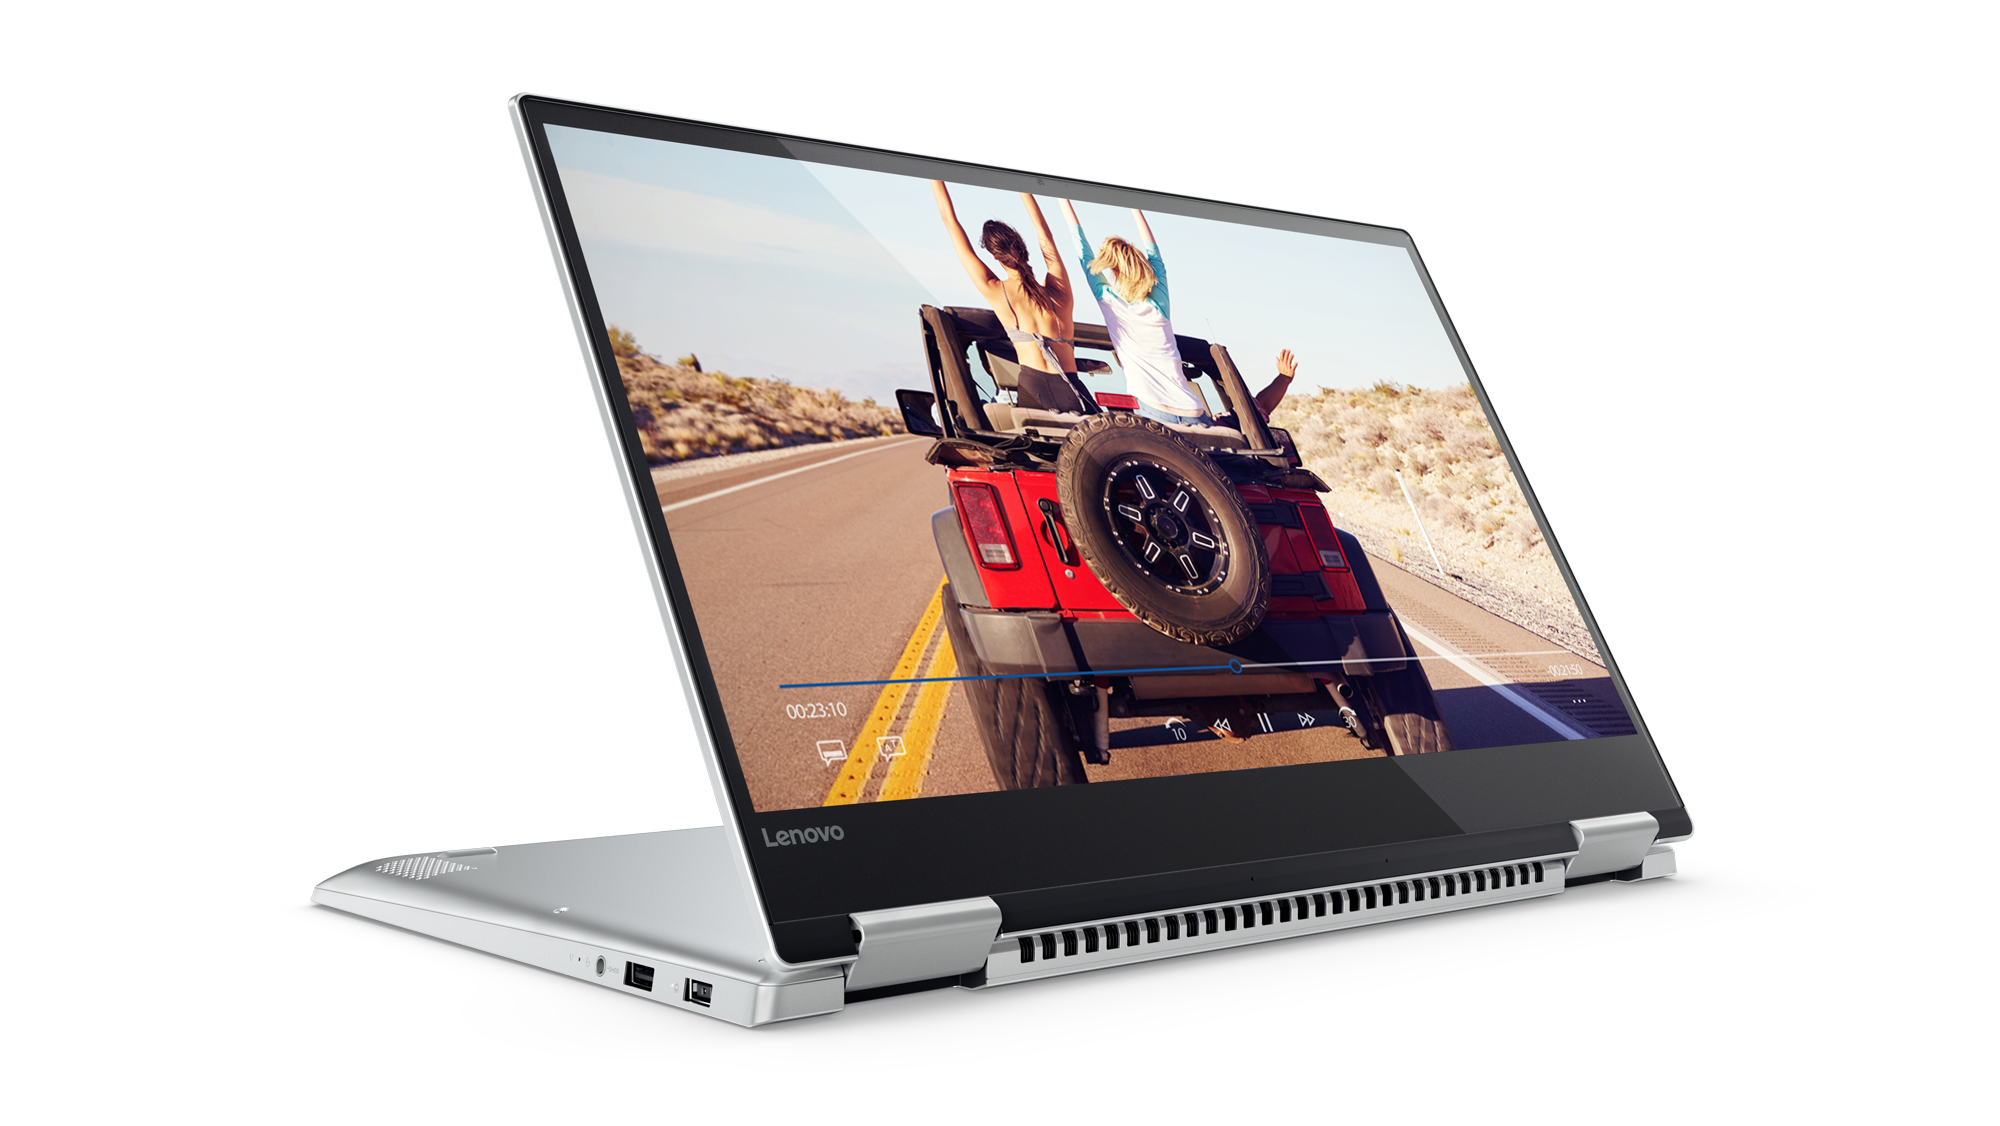 Lenovo Yoga 720 15 inch multimedia